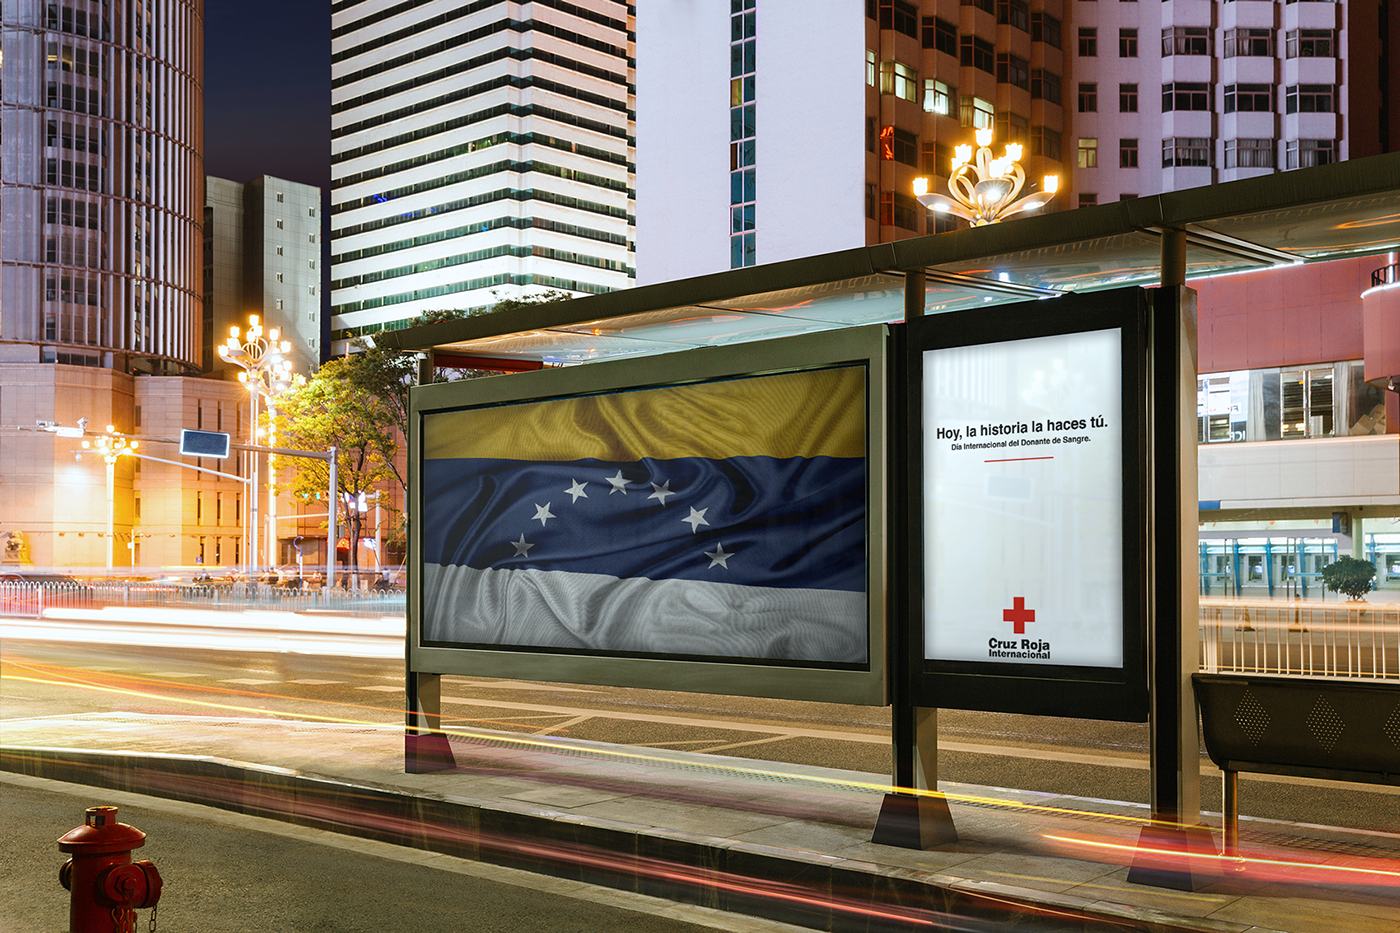 redcross red cross blood donation venezuela Ecuador colombia